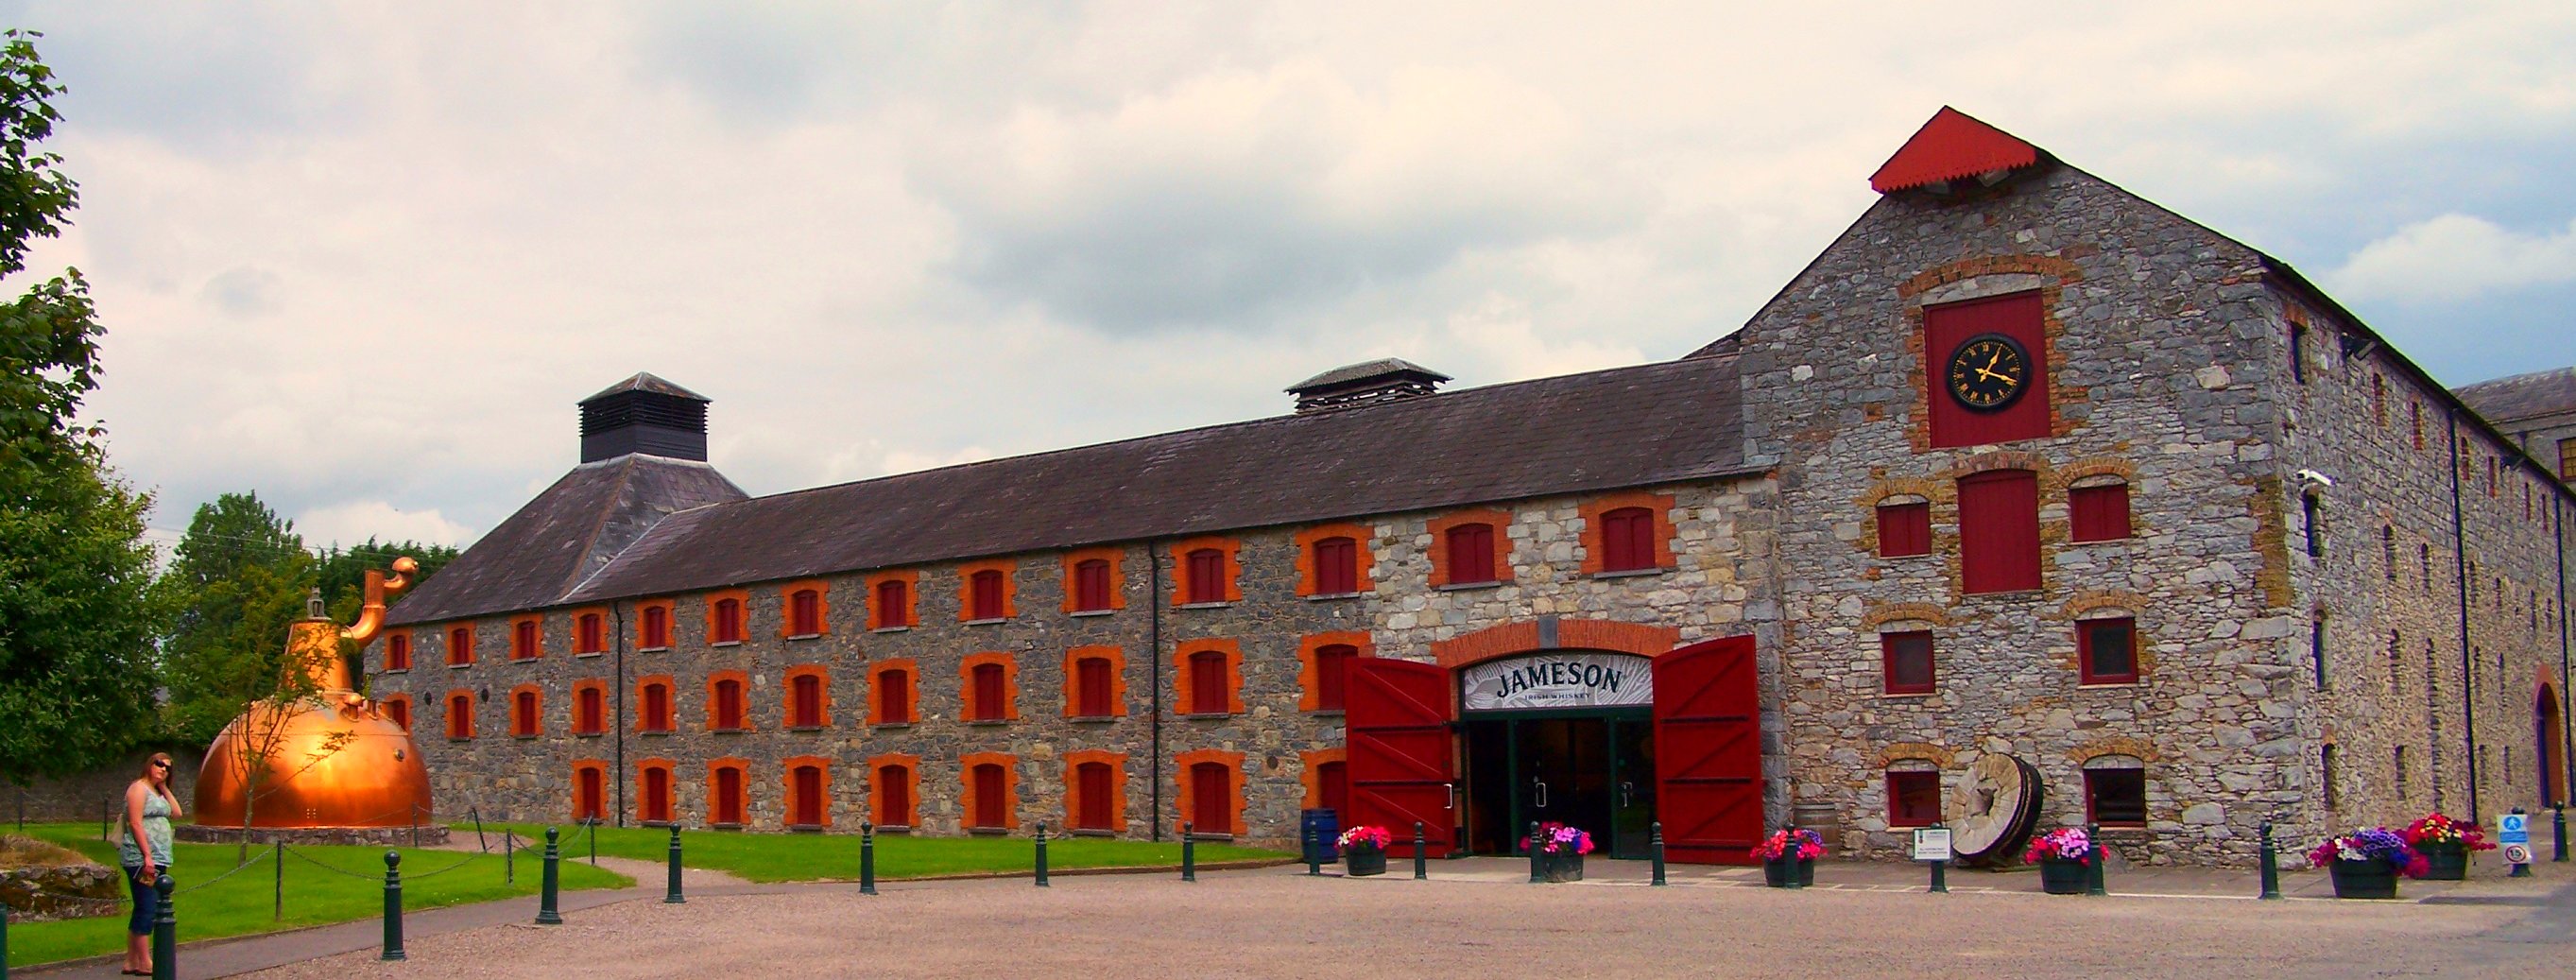 Top 10 de Cork - Middleton distillery